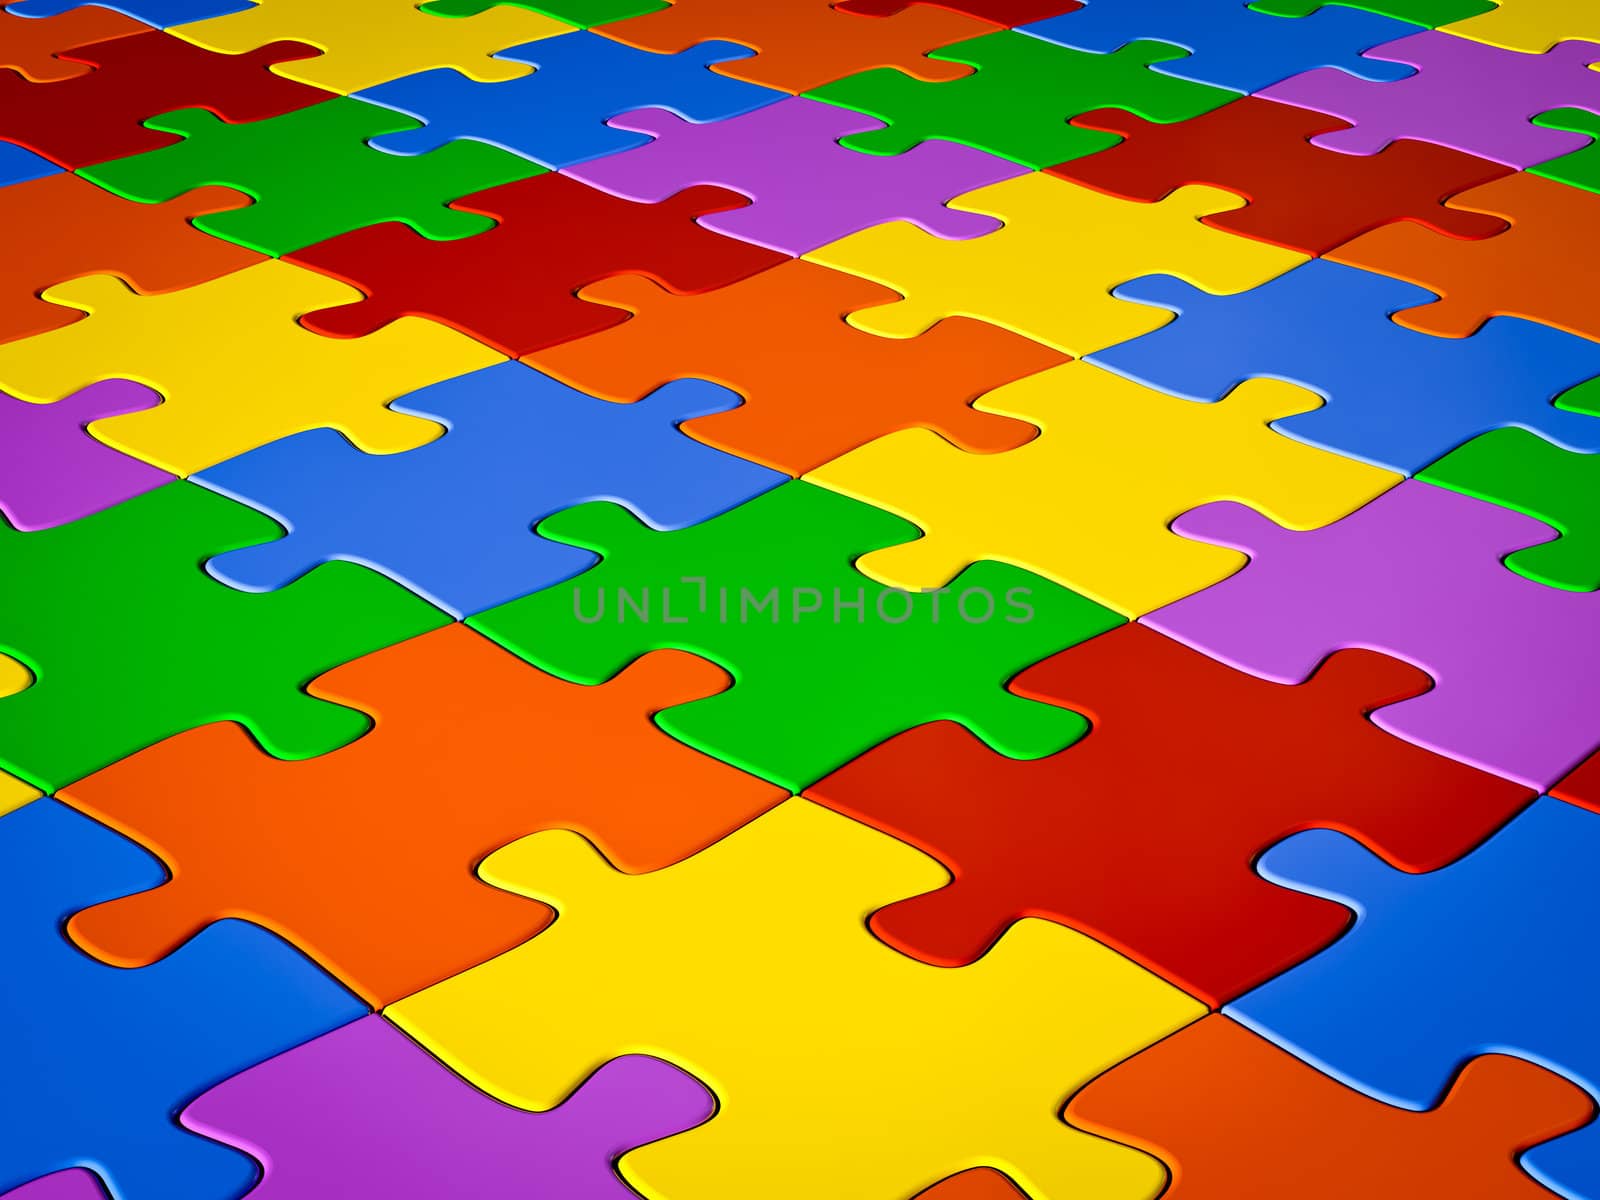 Jigsaw puzzle by dimol